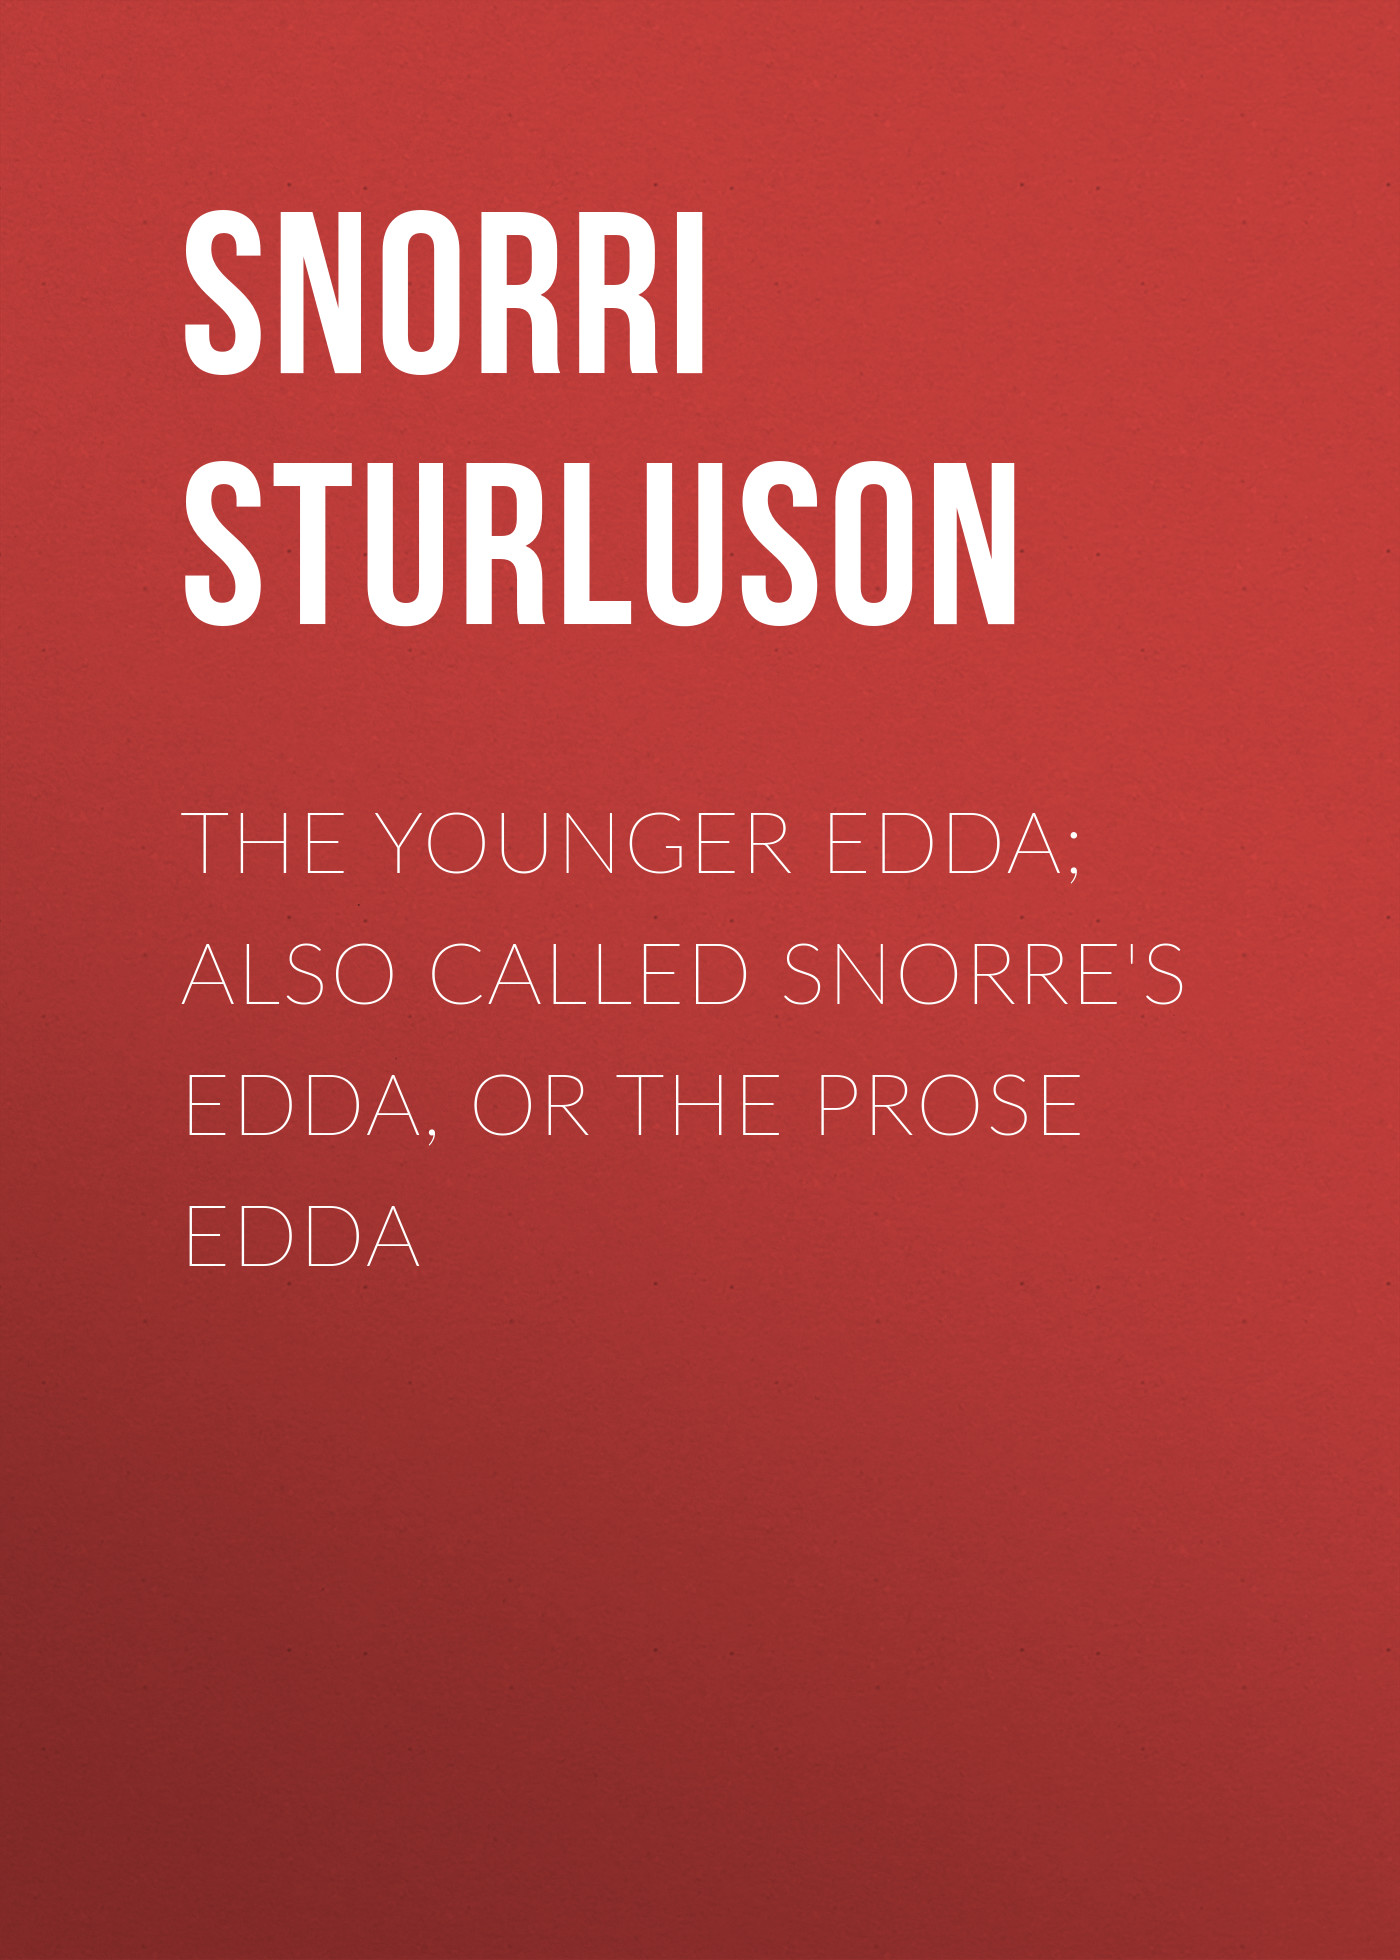 The Younger Edda; Also called Snorre's Edda, or The Prose Edda